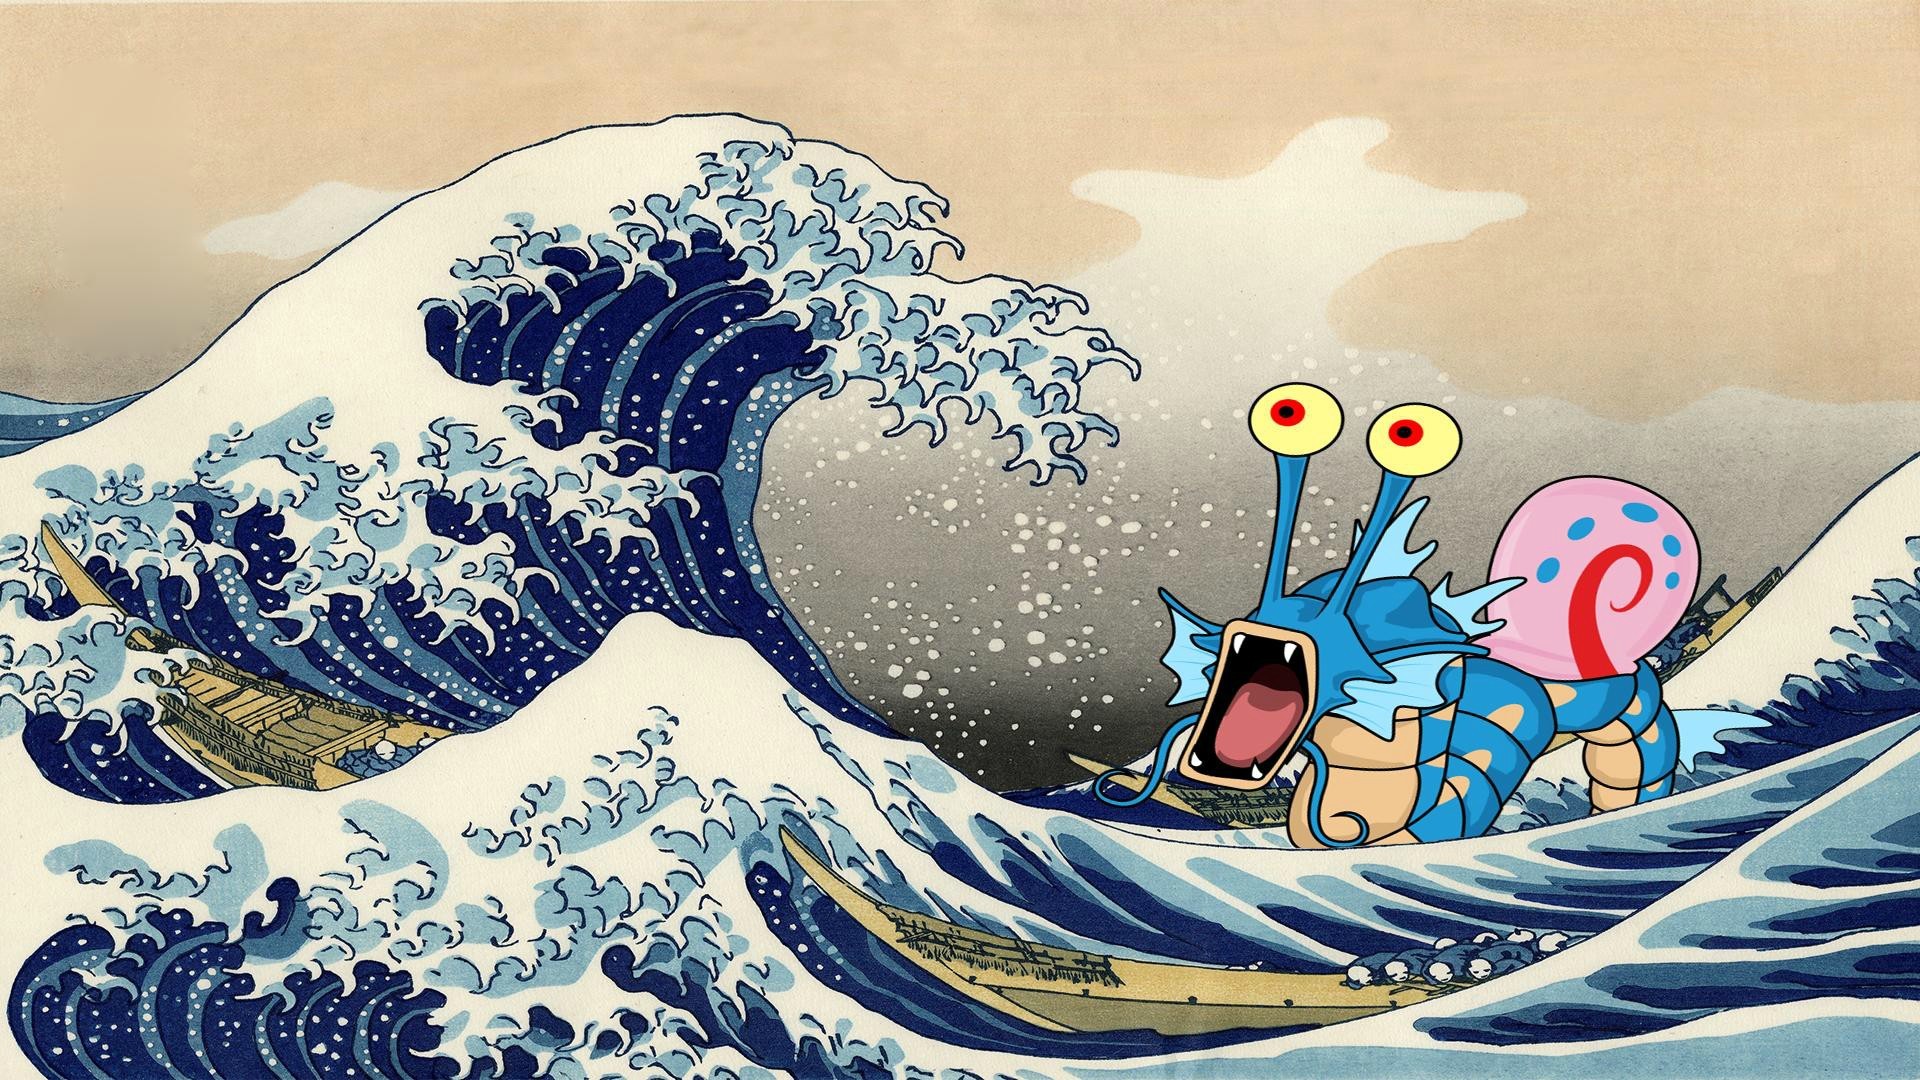 Anime 1920x1080 Gyarados The Great Wave of Kanagawa humor anime fan art Pokémon gary (spongebob)